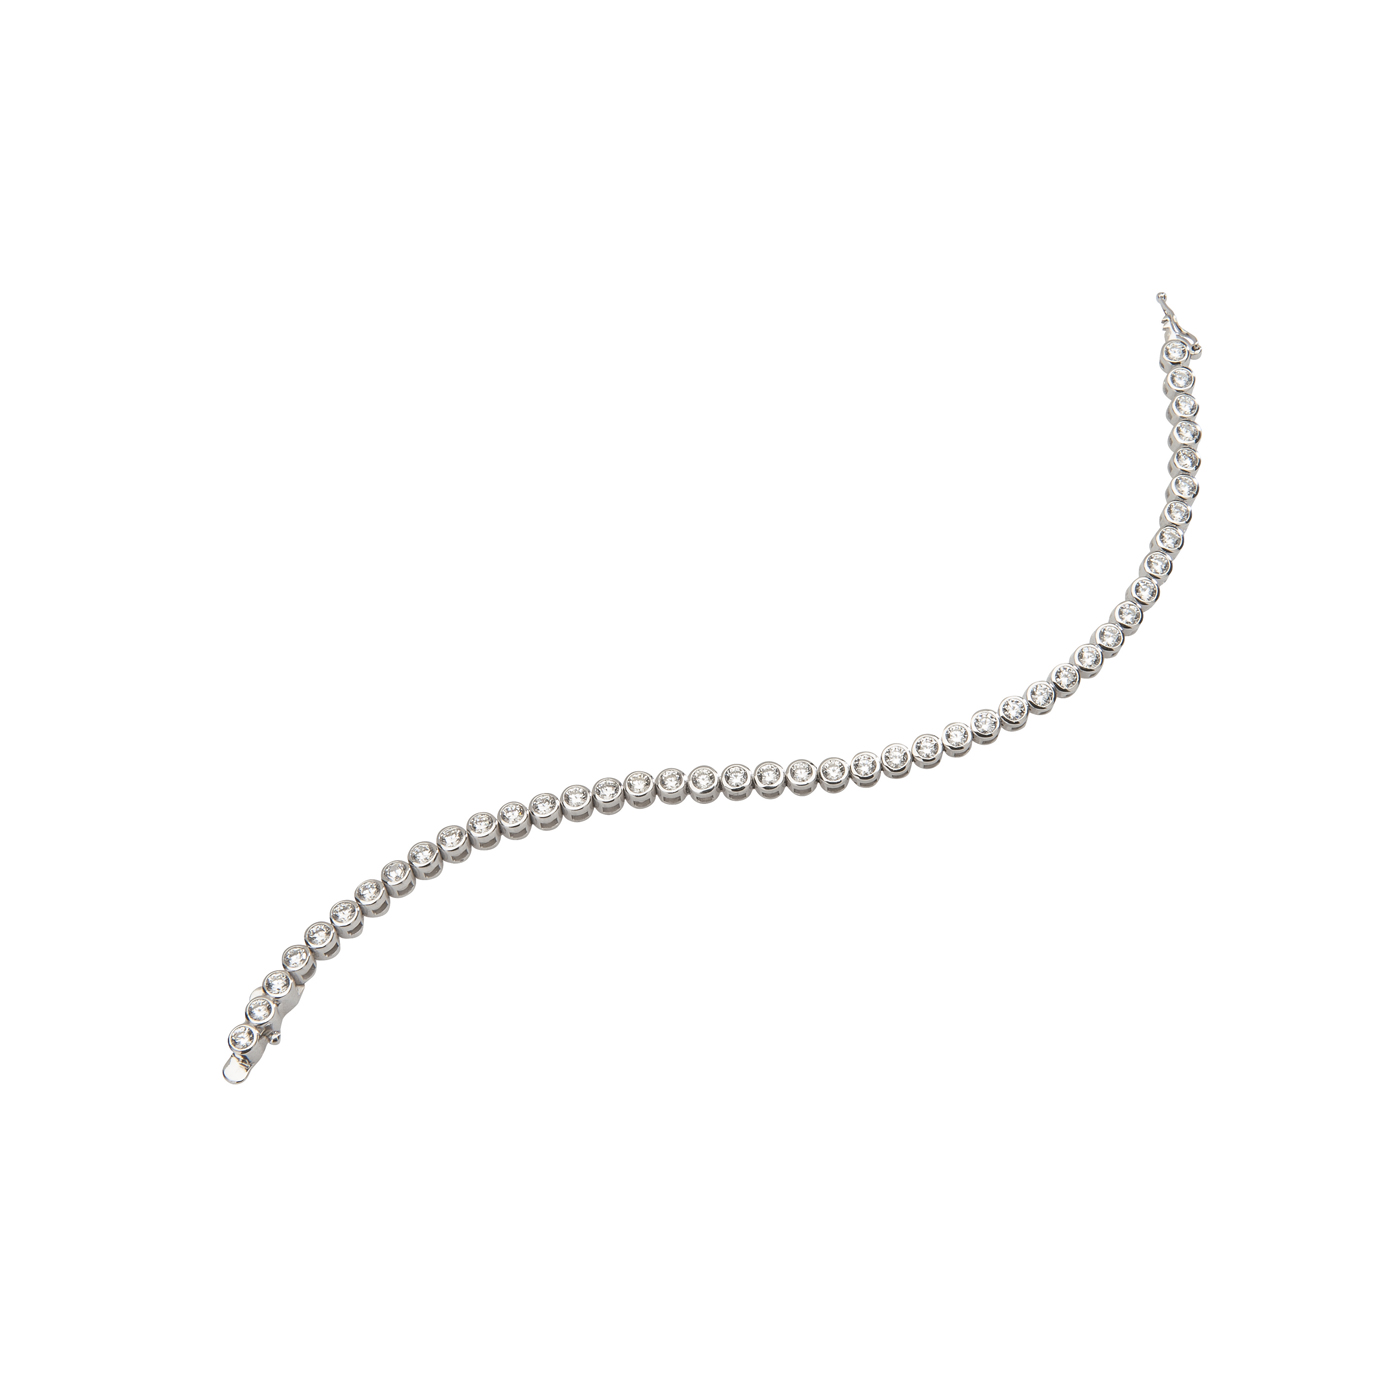 Armband, 925 Ag rhodiniert, Länge 19 cm, Zirkonia weiß - 1 Stück